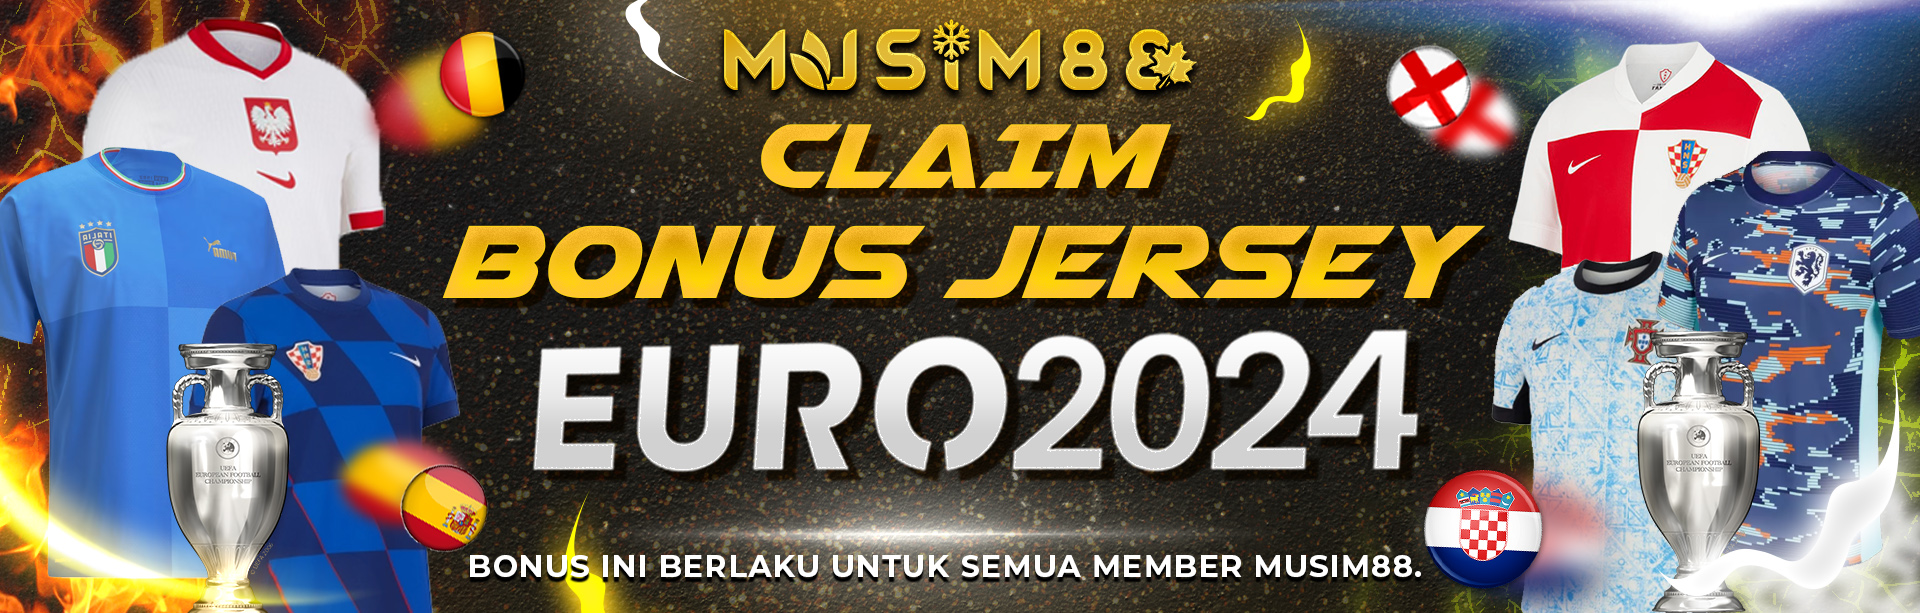 EVENT CLAIM BONUS JERSEY EURO 2024